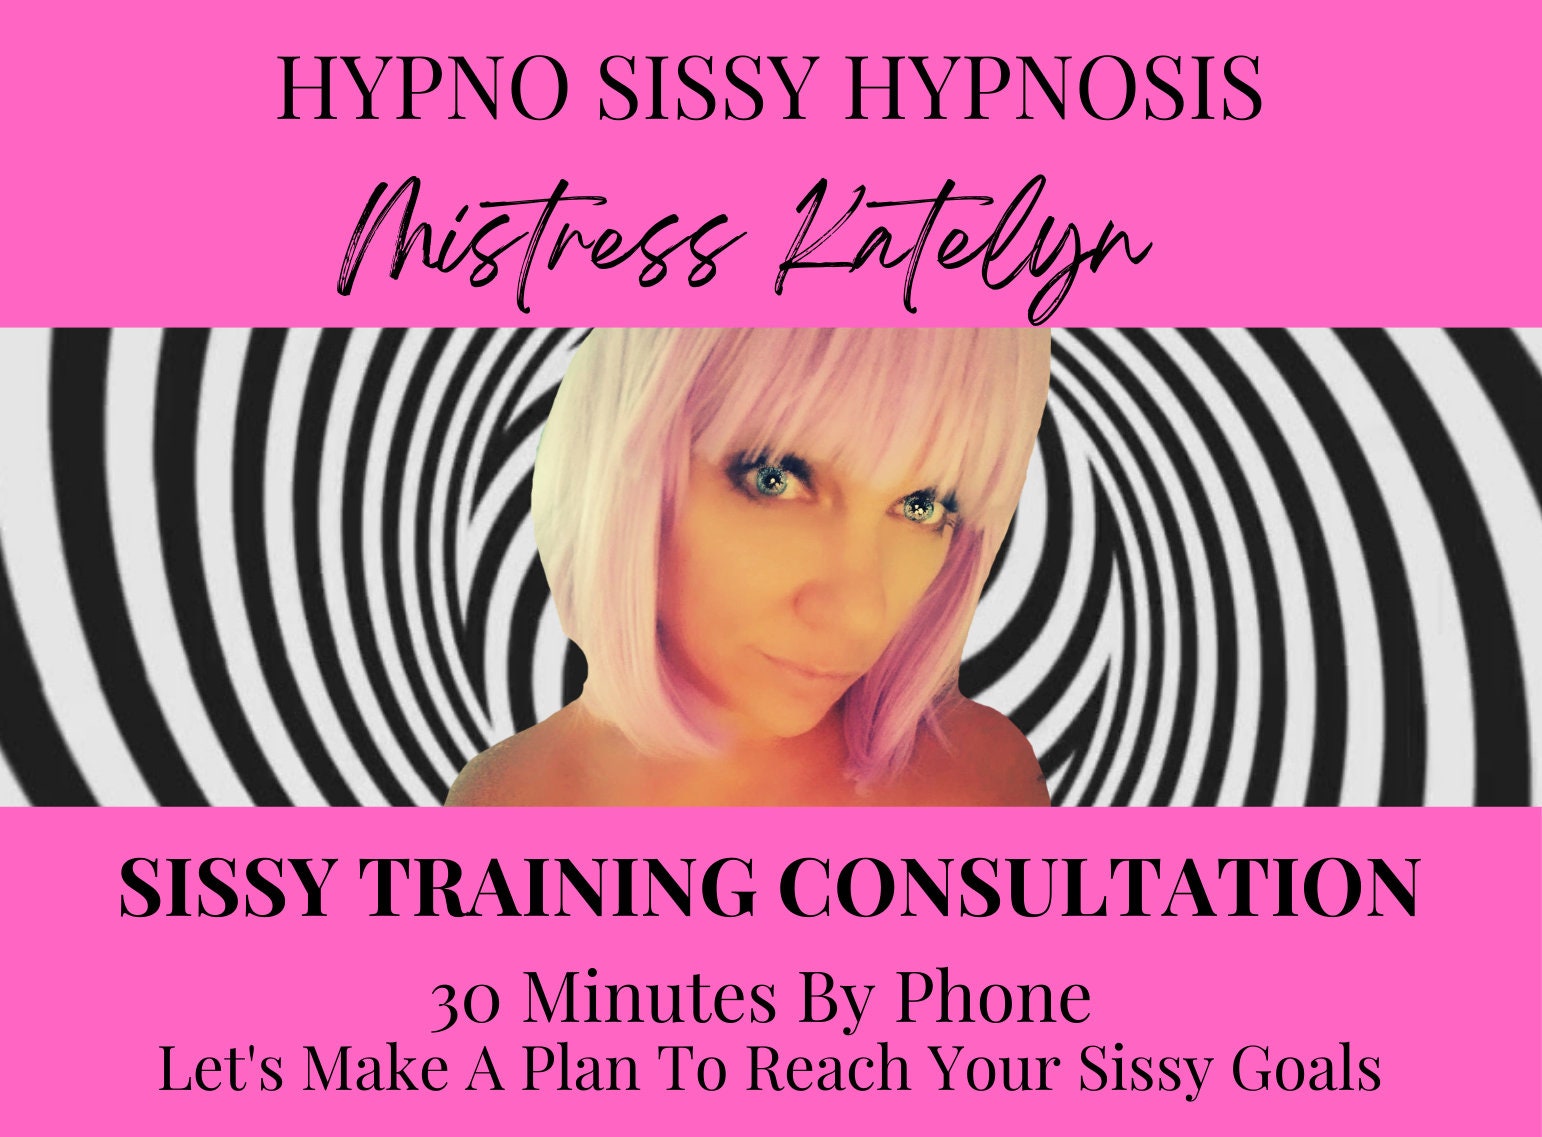 Sissy Hypno Trainer